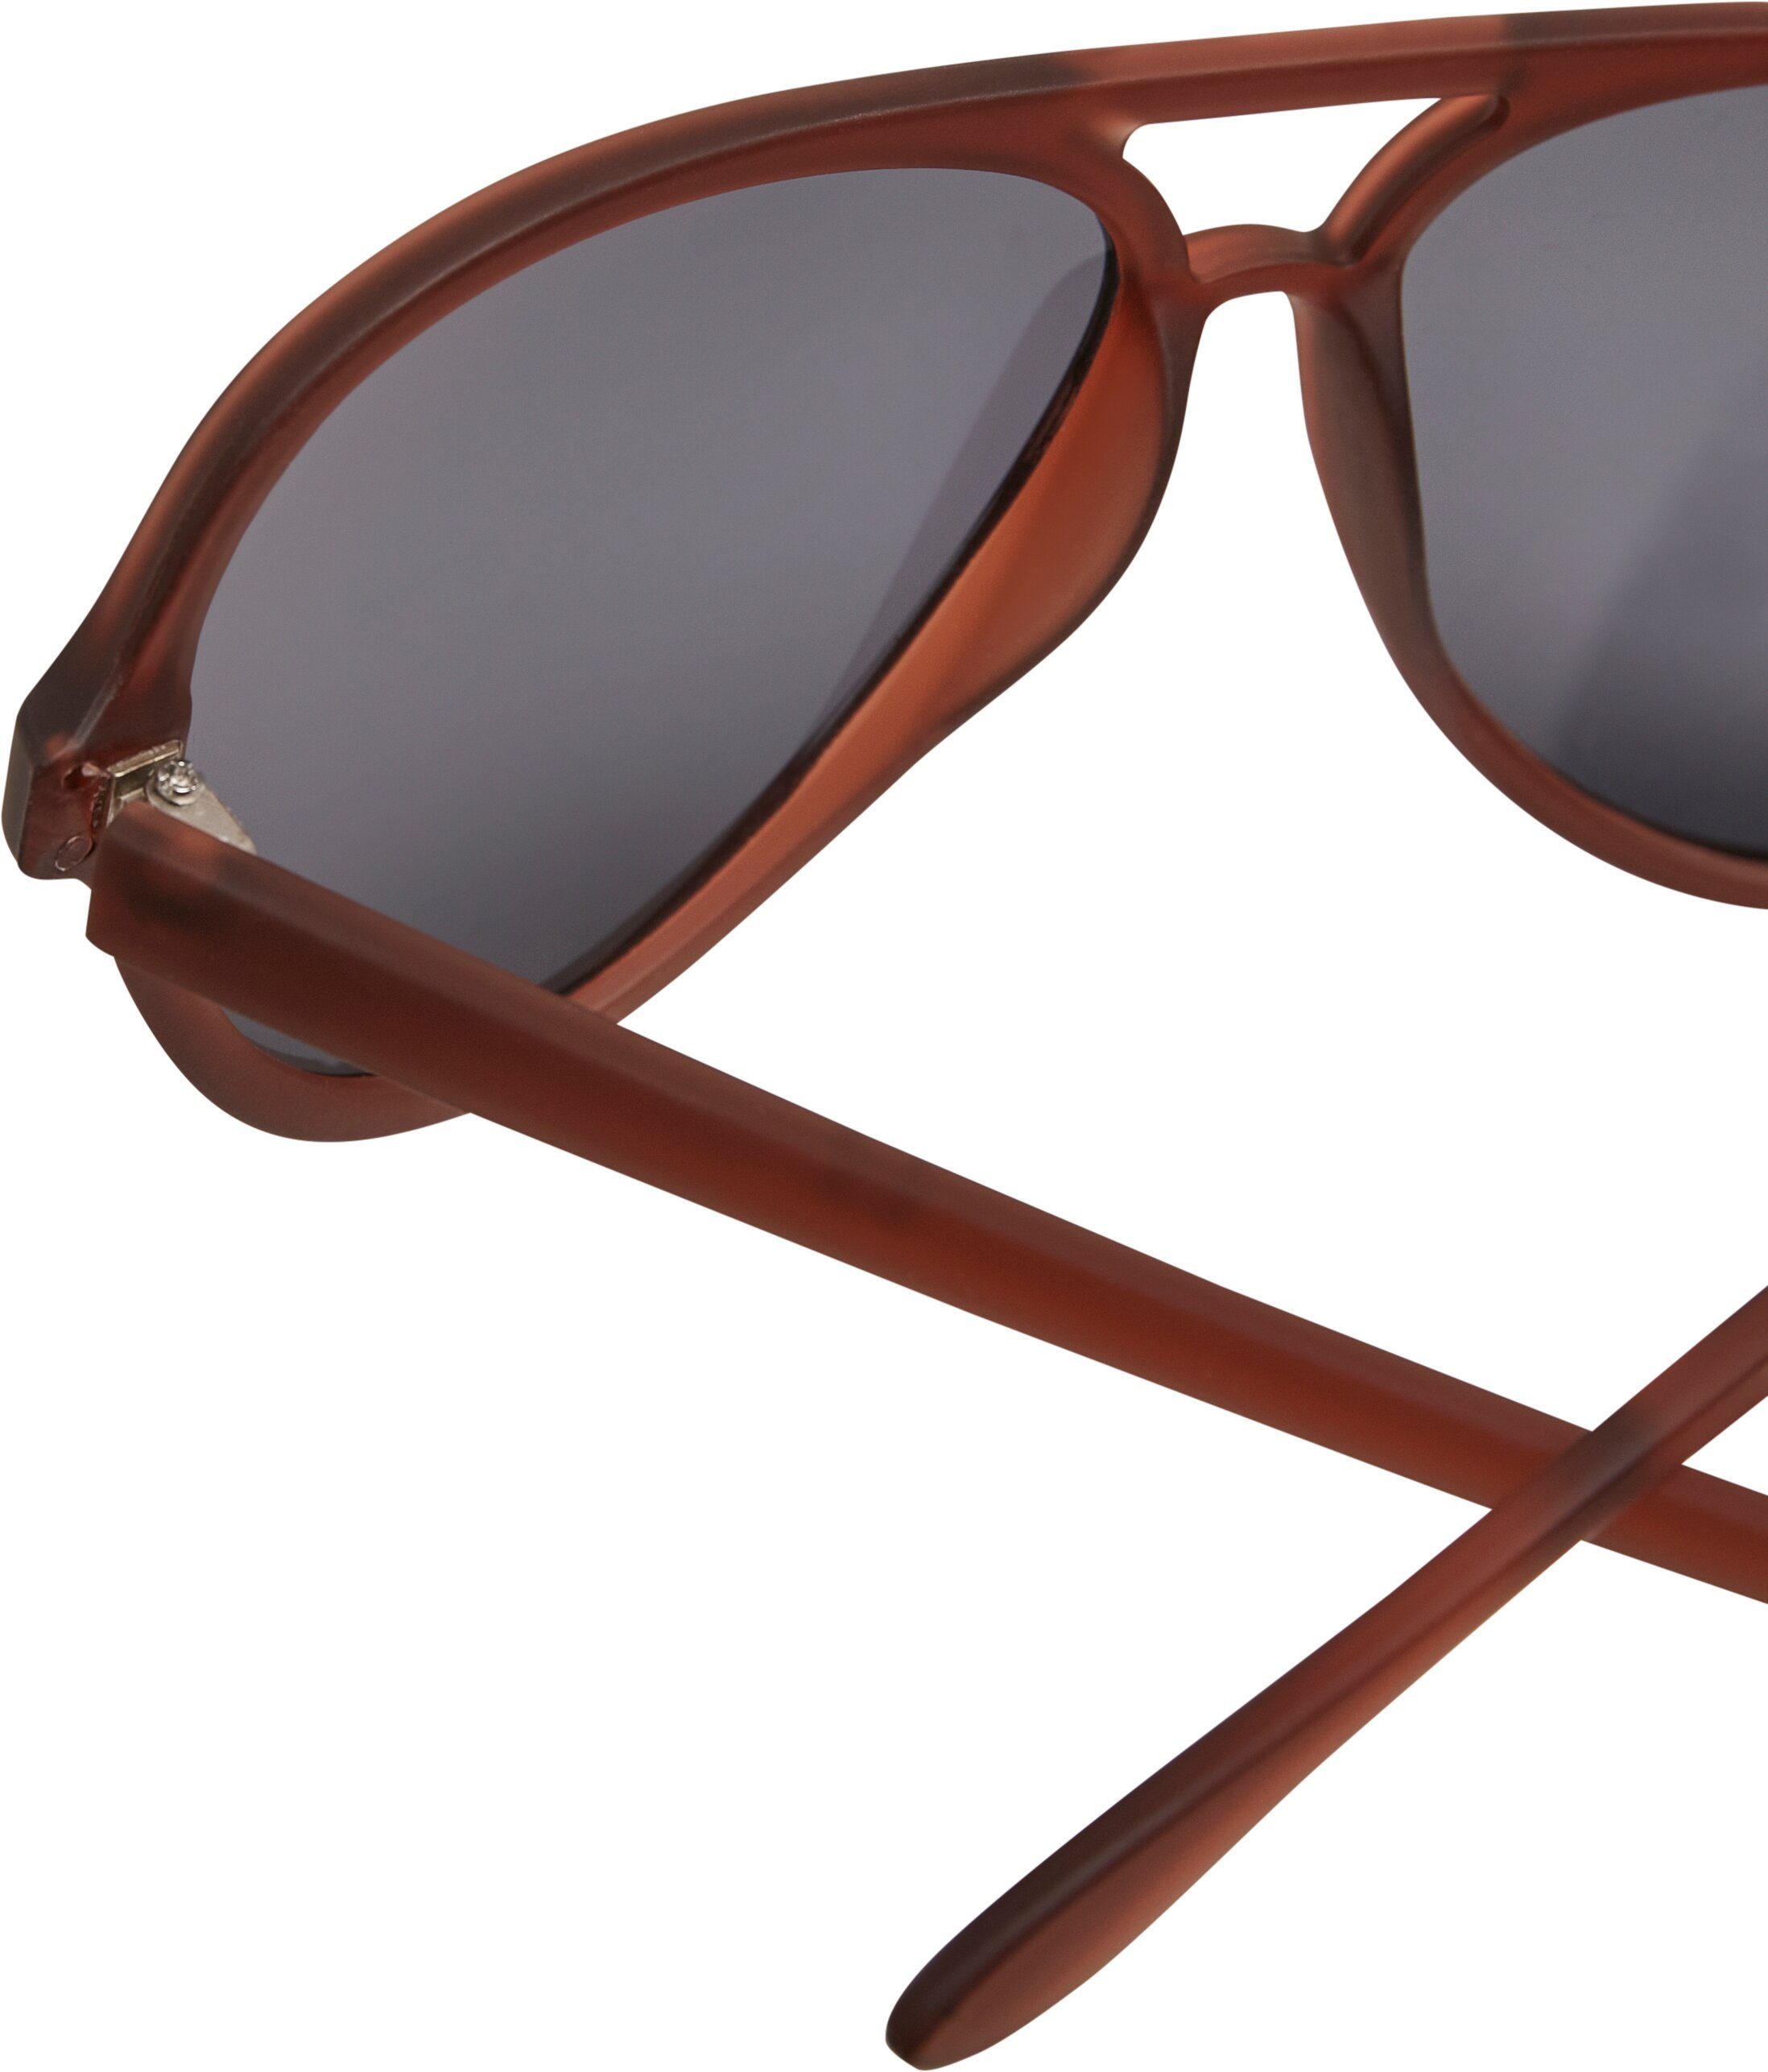 Sunglasses Sonnenbrille March MSTRDS Accessoires brown